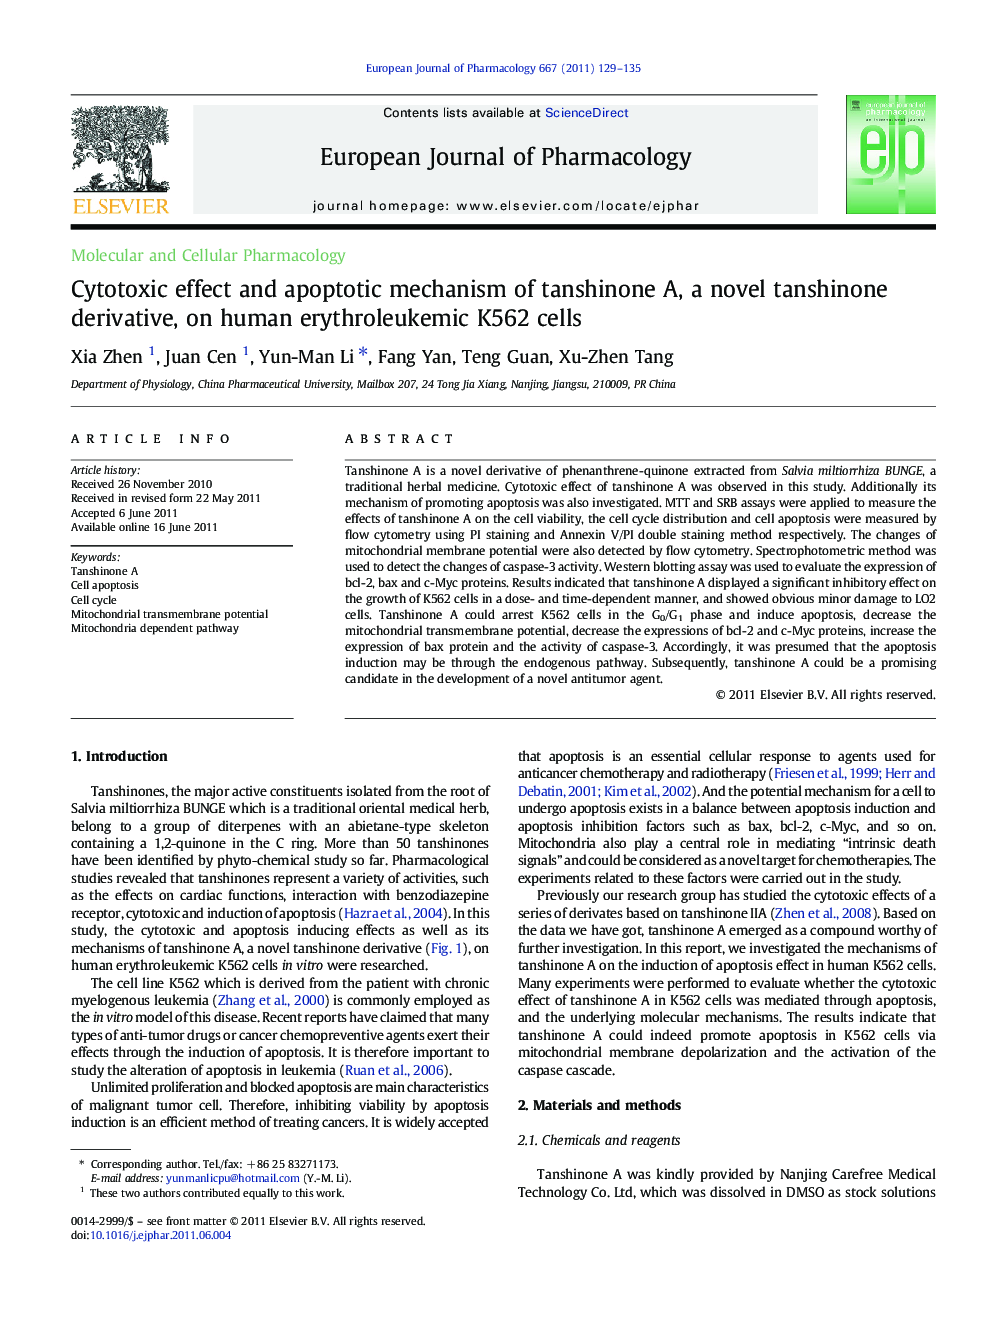 Cytotoxic effect and apoptotic mechanism of tanshinone A, a novel tanshinone derivative, on human erythroleukemic K562 cells